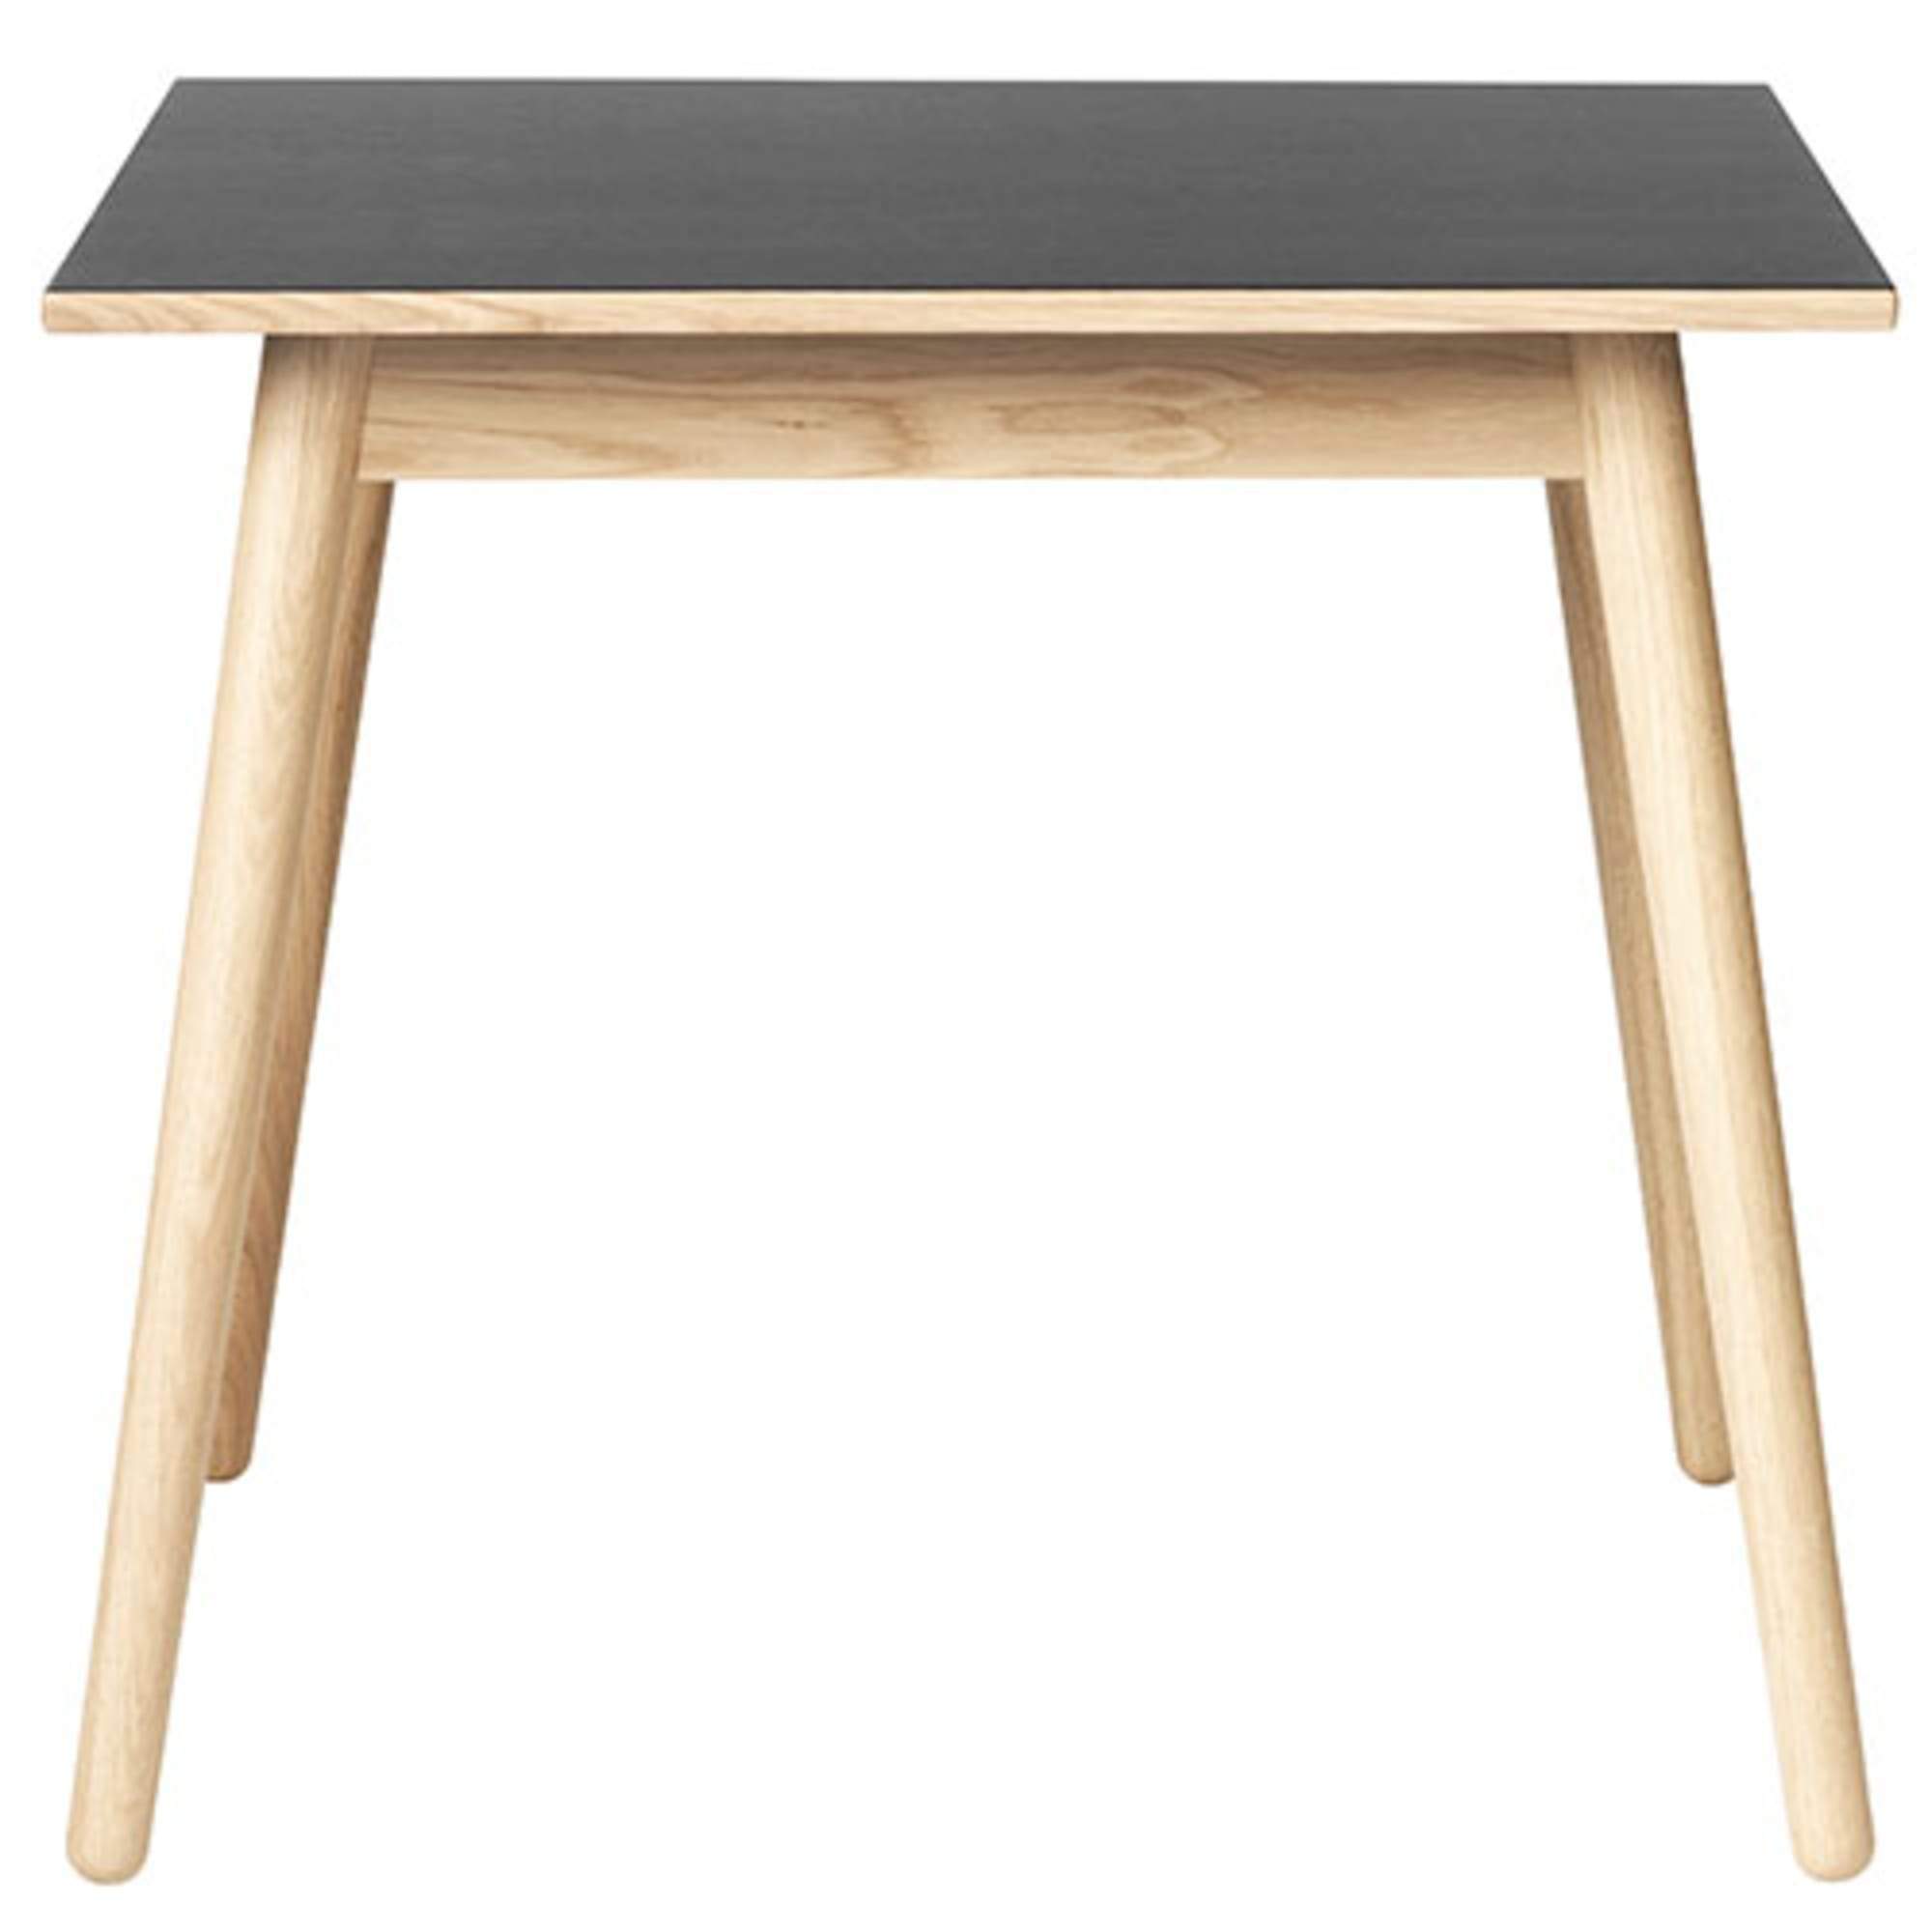 Fdb Møbler C35 matbord ek, svart linoleum bordsskiva, 82x82cm